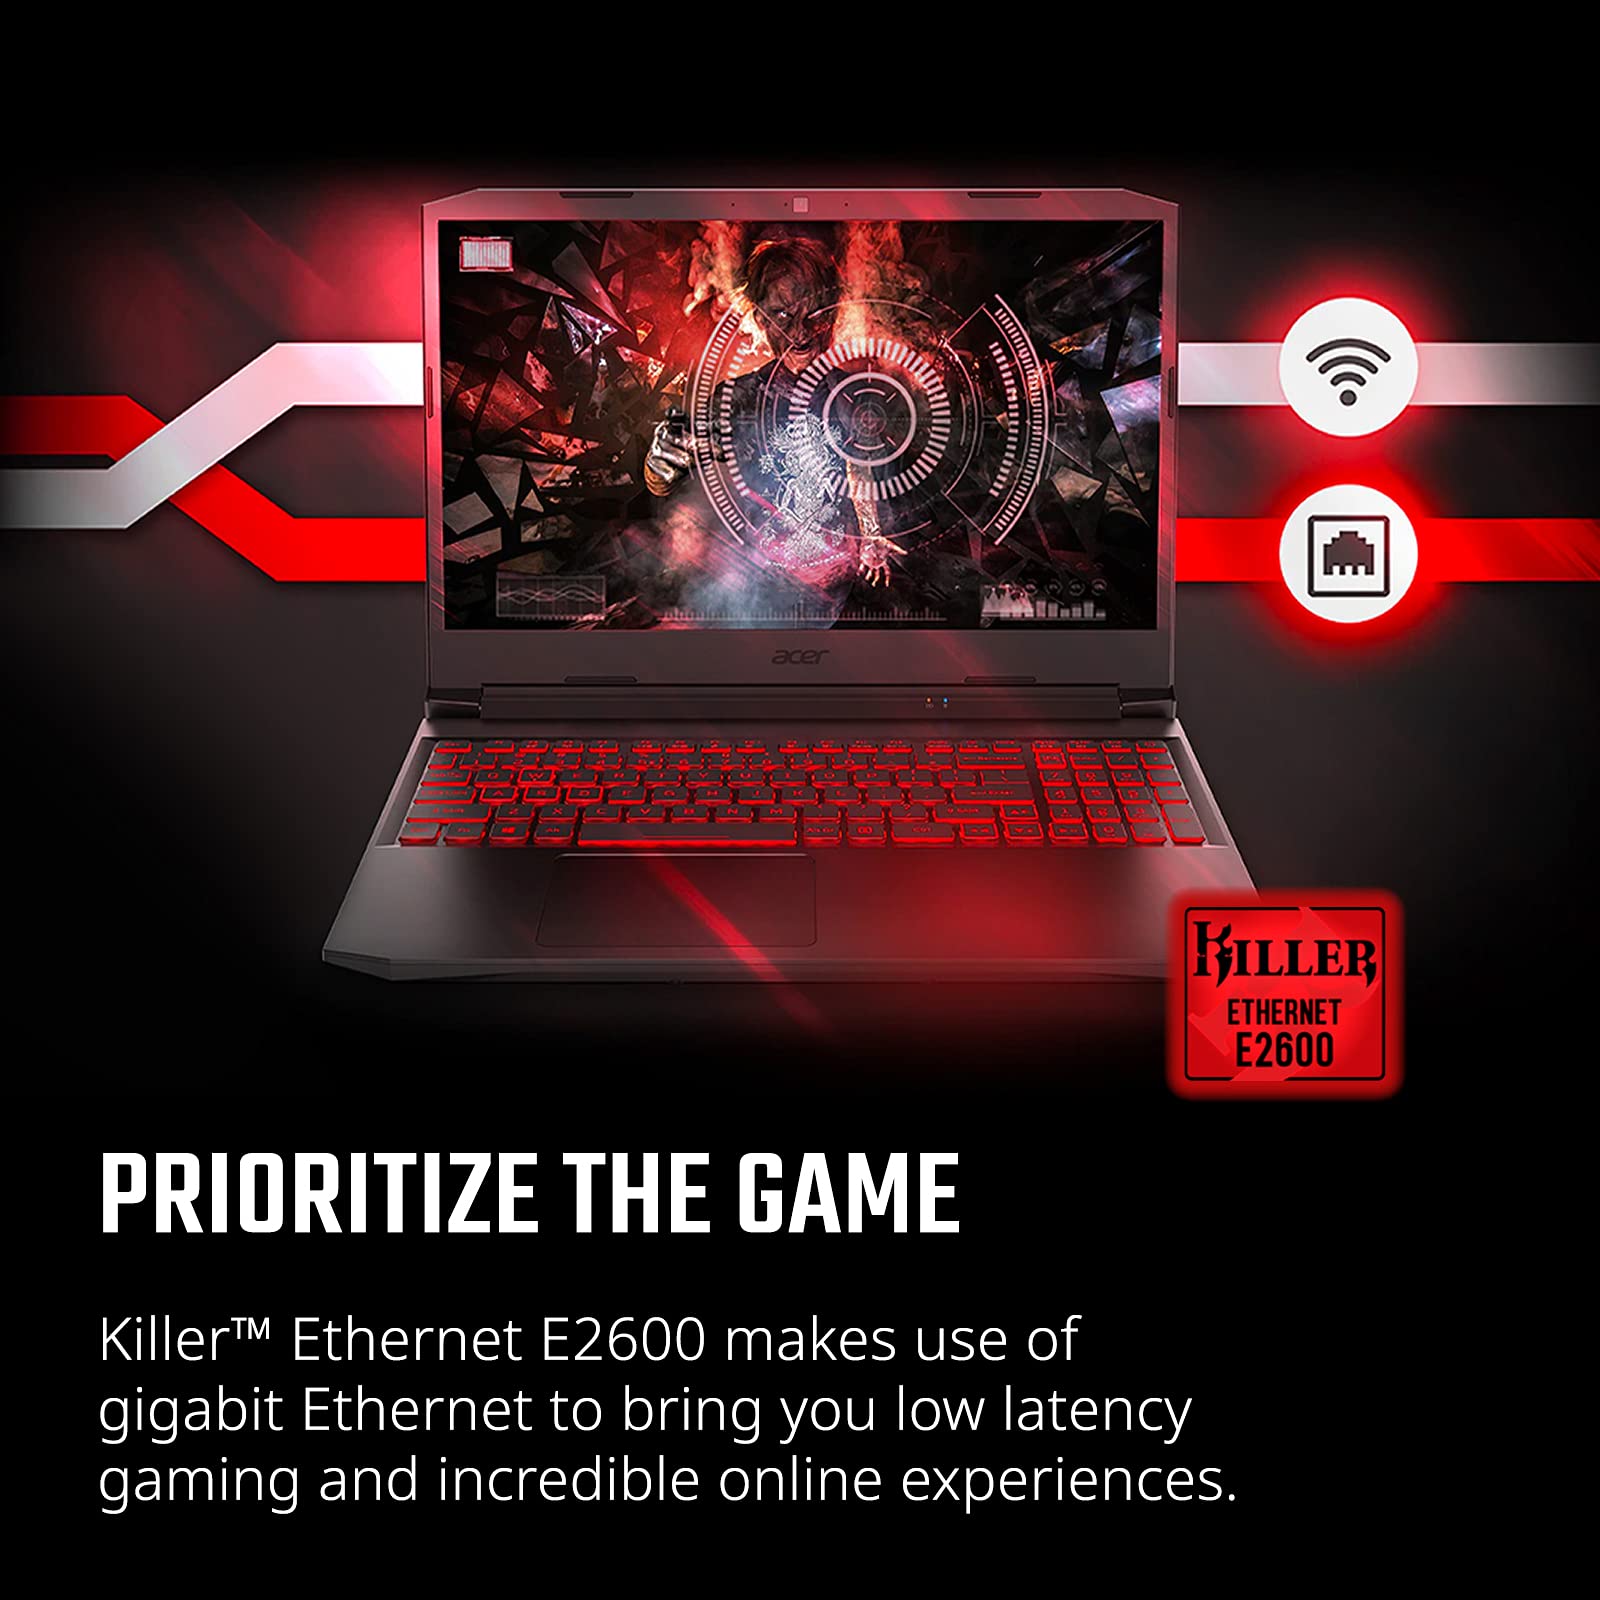 Acer Nitro 5 AN515-55-53E5 Gaming Laptop | Intel Core i5-10300H | NVIDIA GeForce RTX 3050 GPU | 15.6